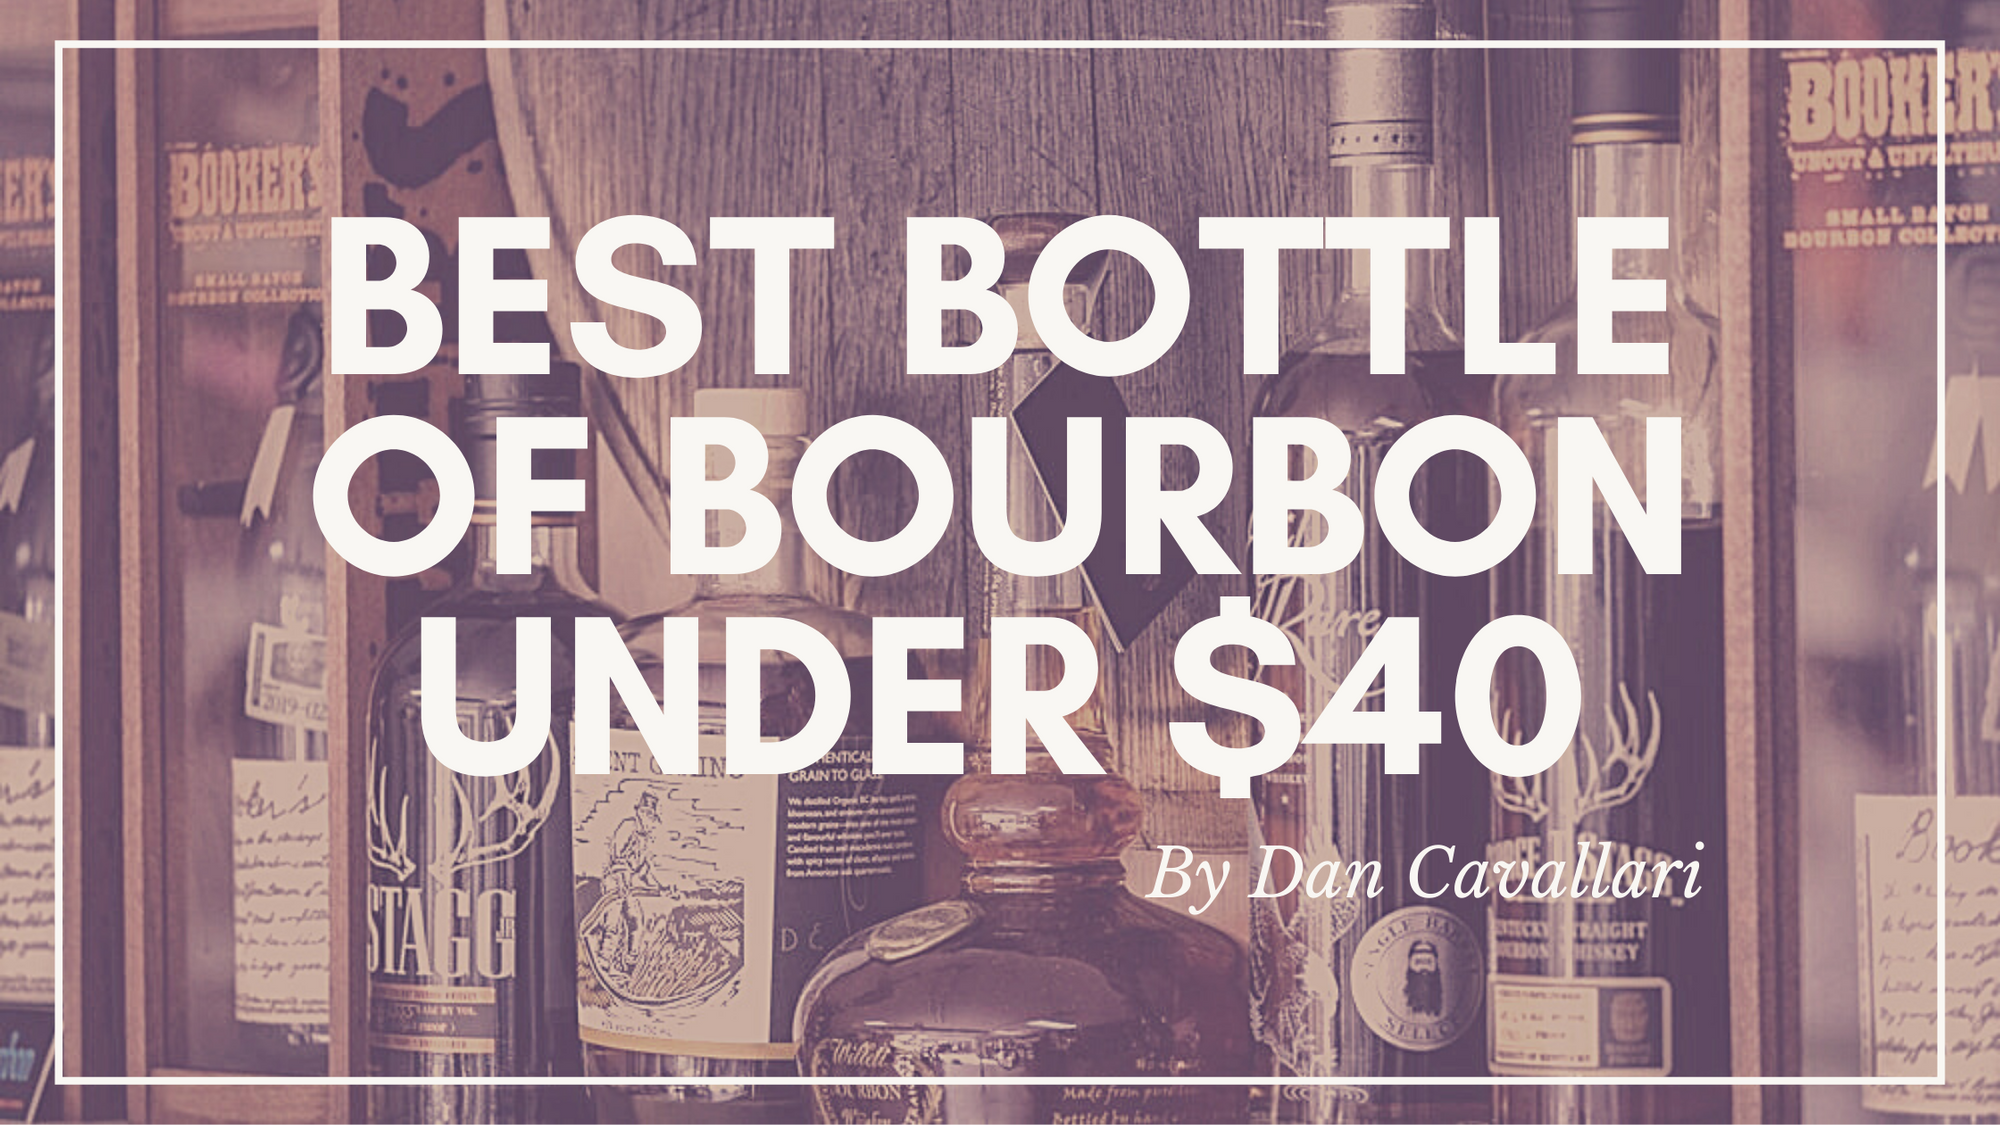 What's the best bottle of bourbon under $40?